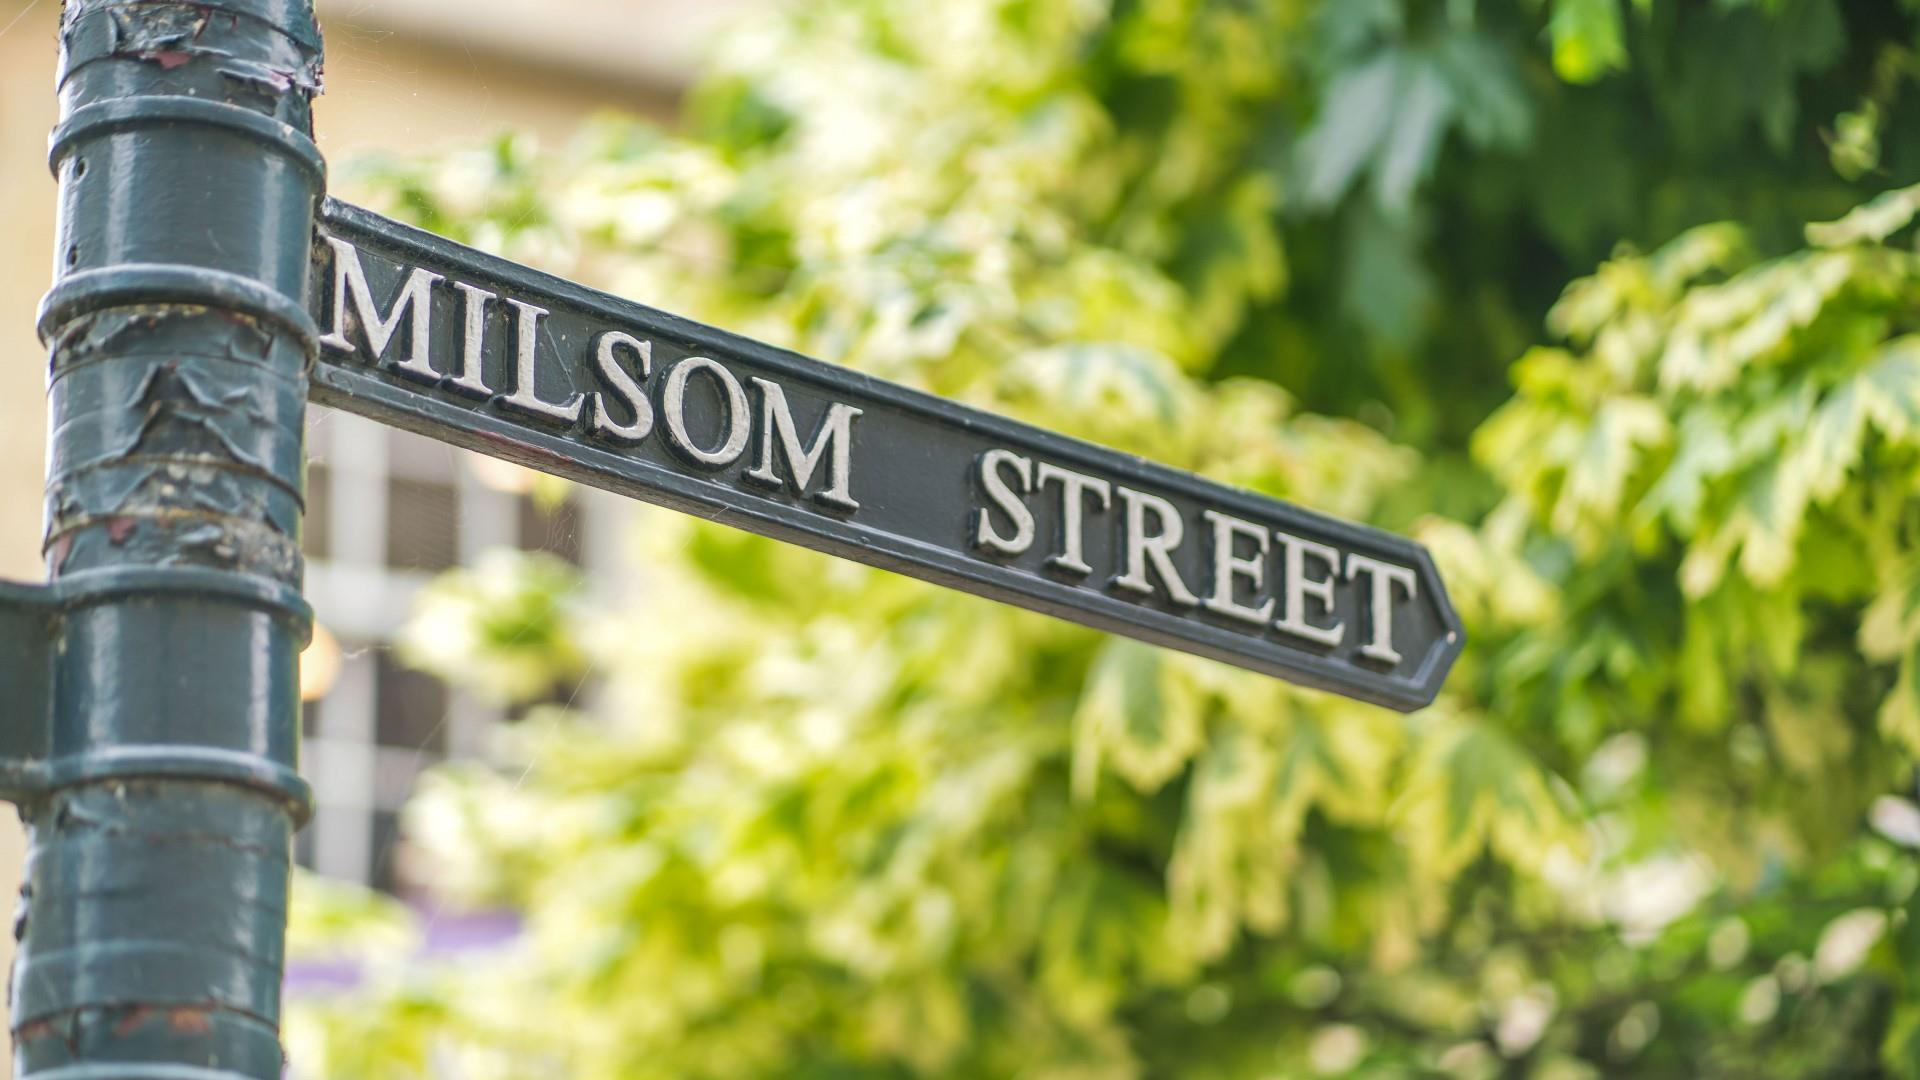 Milsom Place street sign